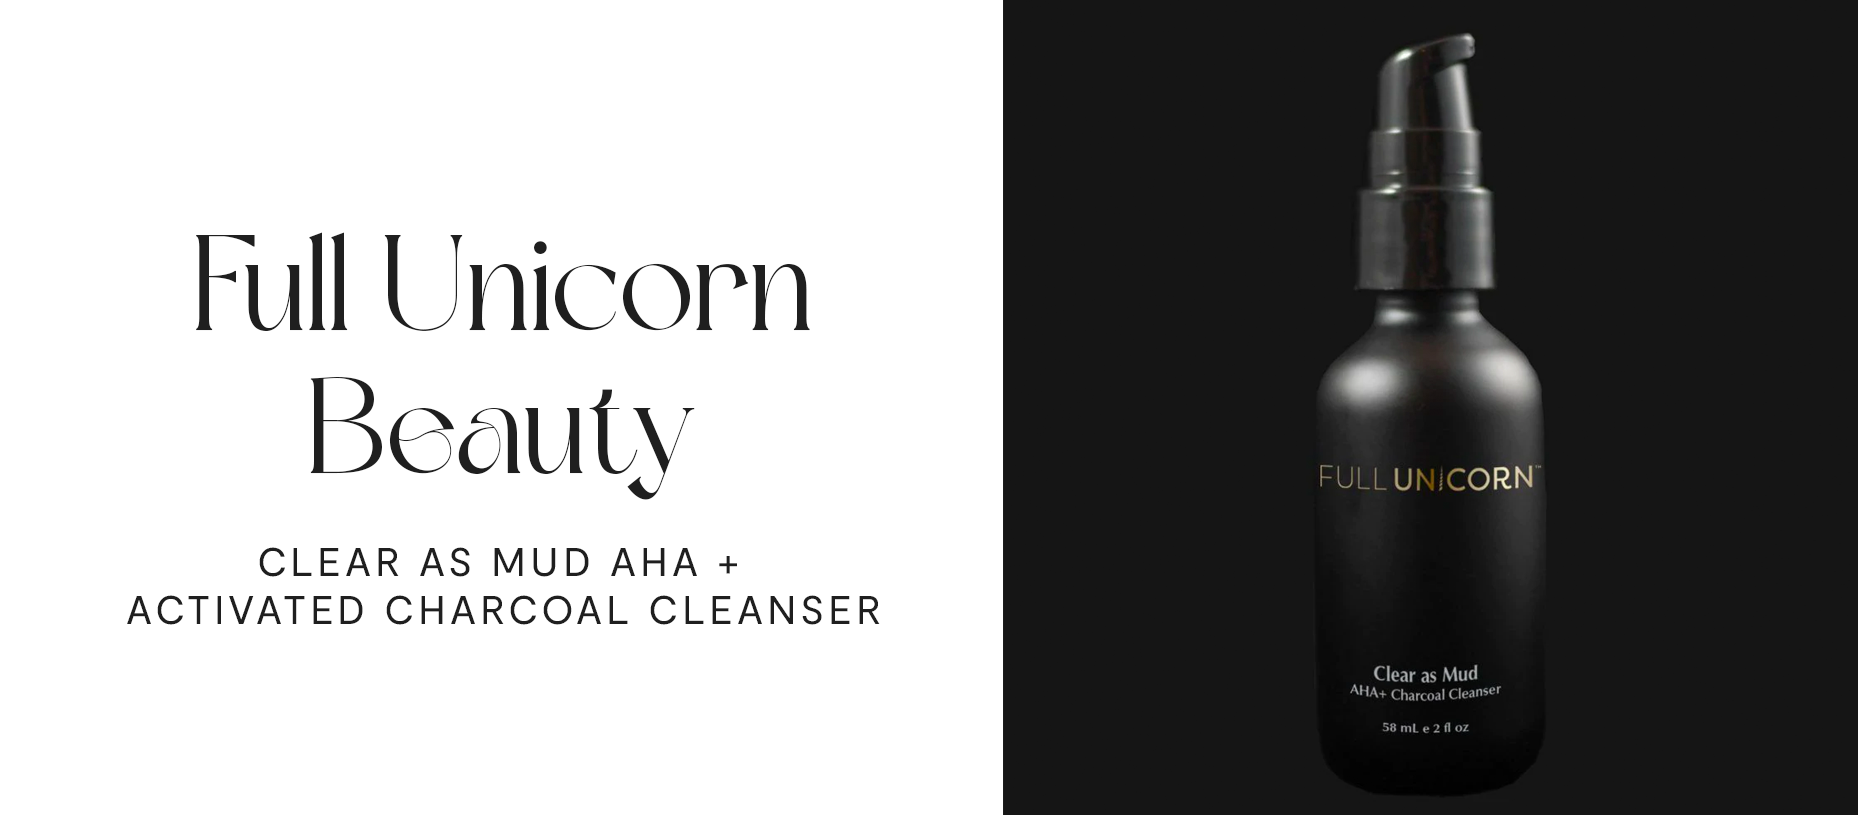 Full Unicorn Beauty - Charcoal Cleanser